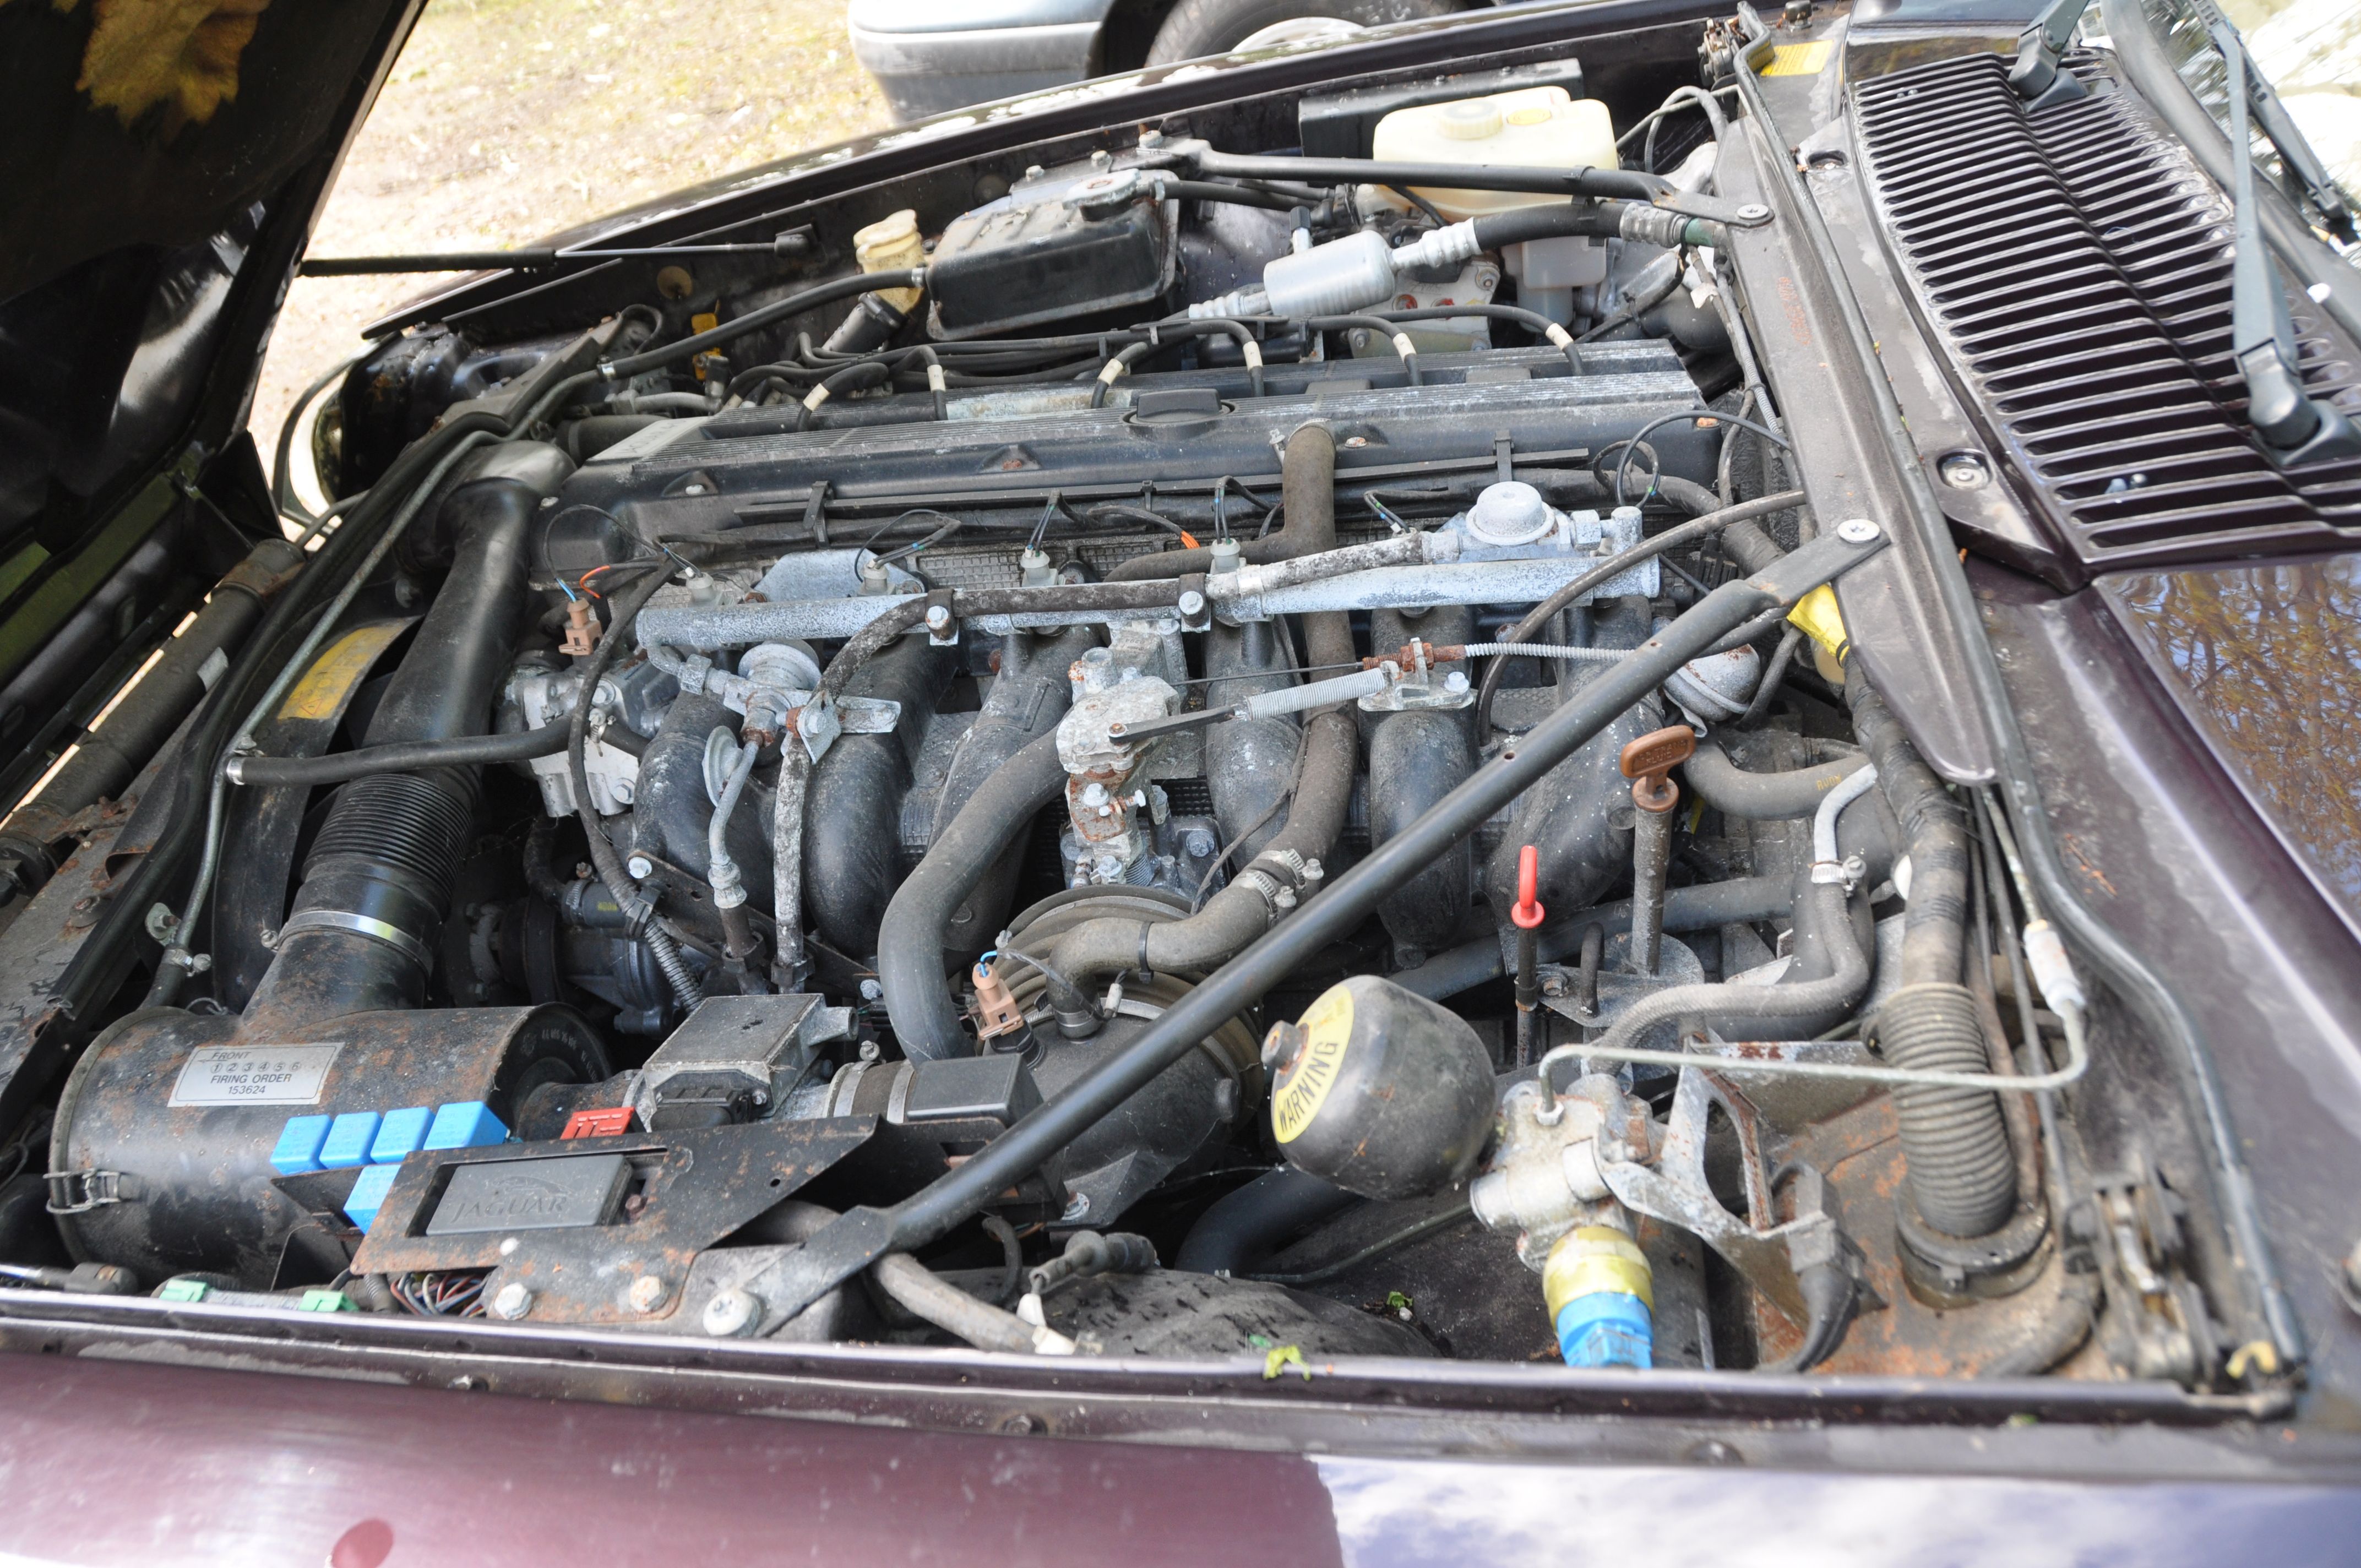 A 1994 JAGUAR XJ-S 4.0 AUTO SPORTS SALOON CAR in burgundy, 3980cc straight 6 cylinder petrol engine, - Image 21 of 26